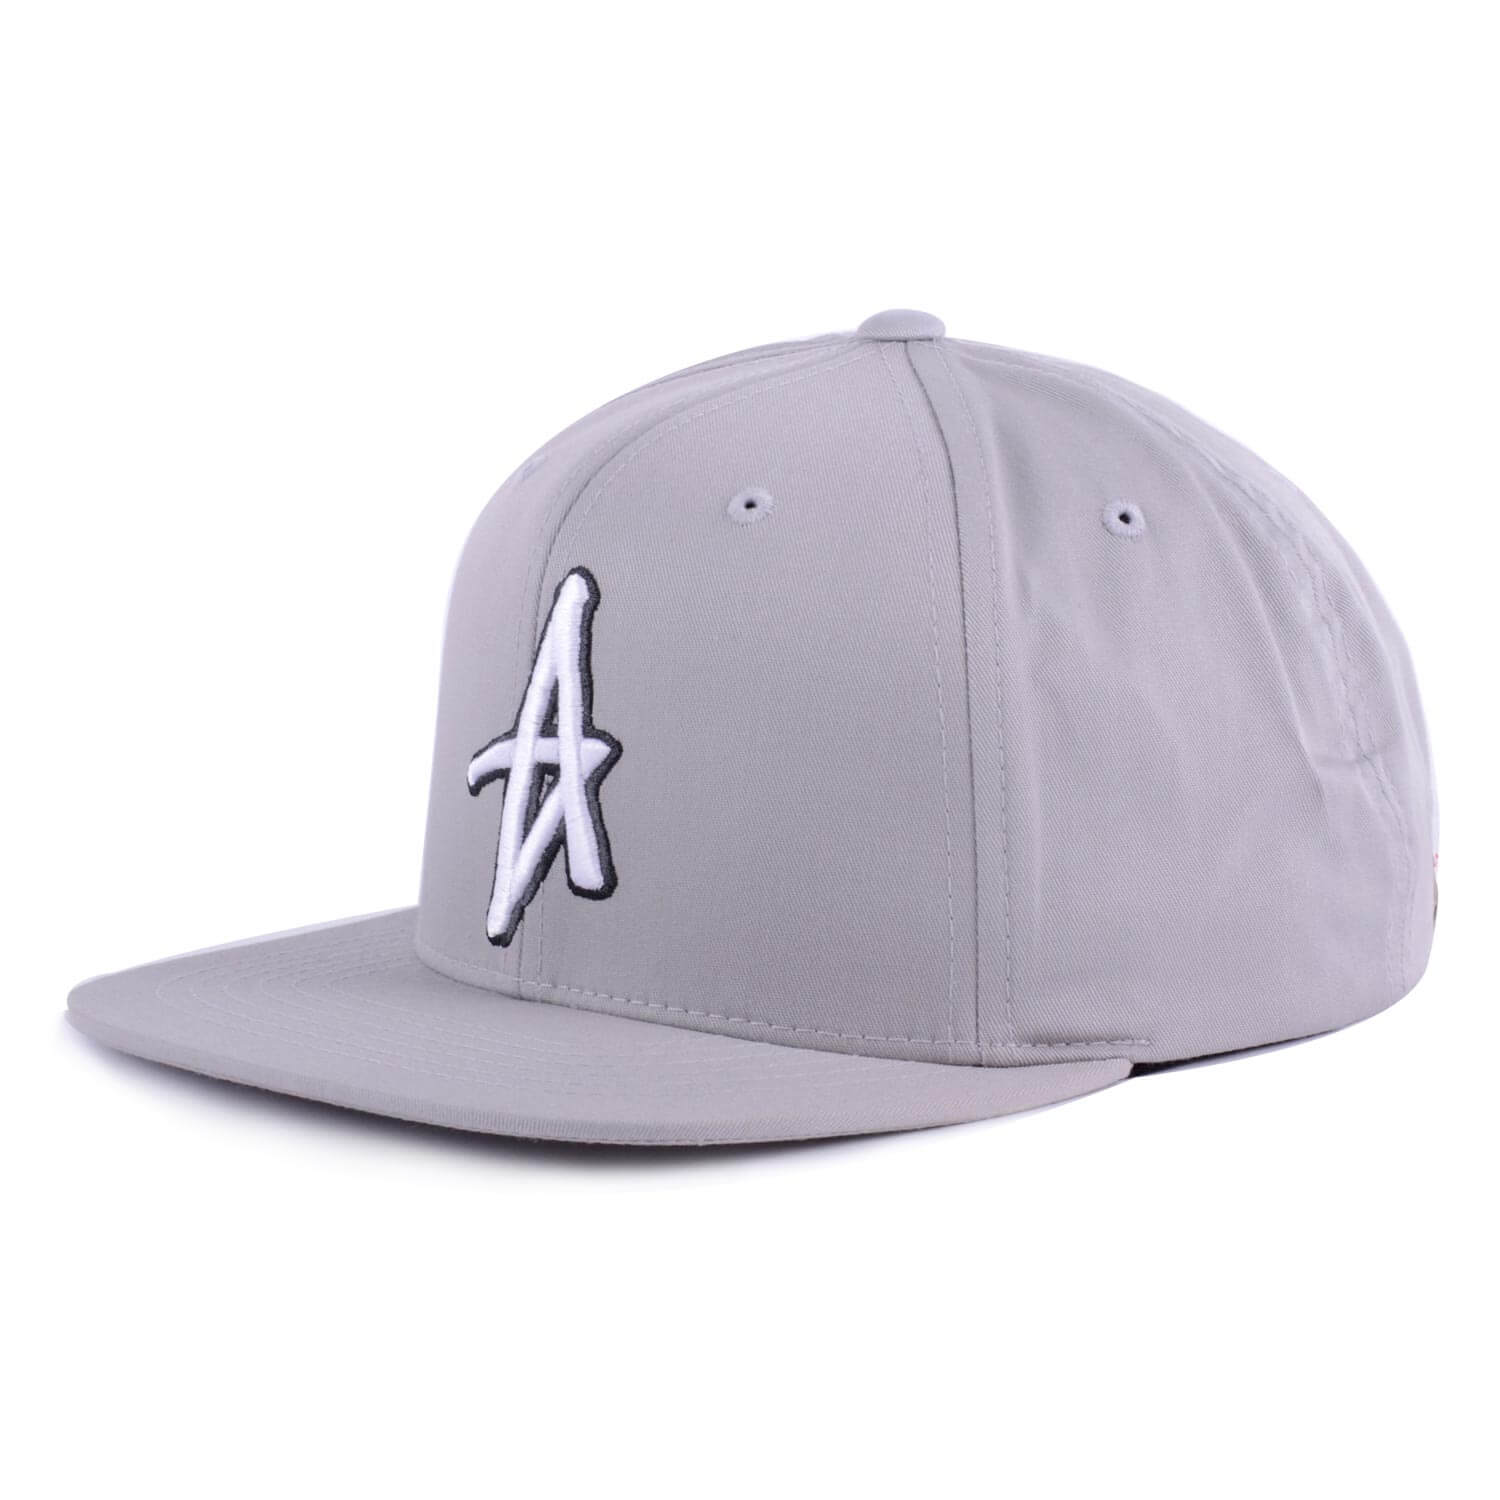 Altamont Decades Snapback Hat